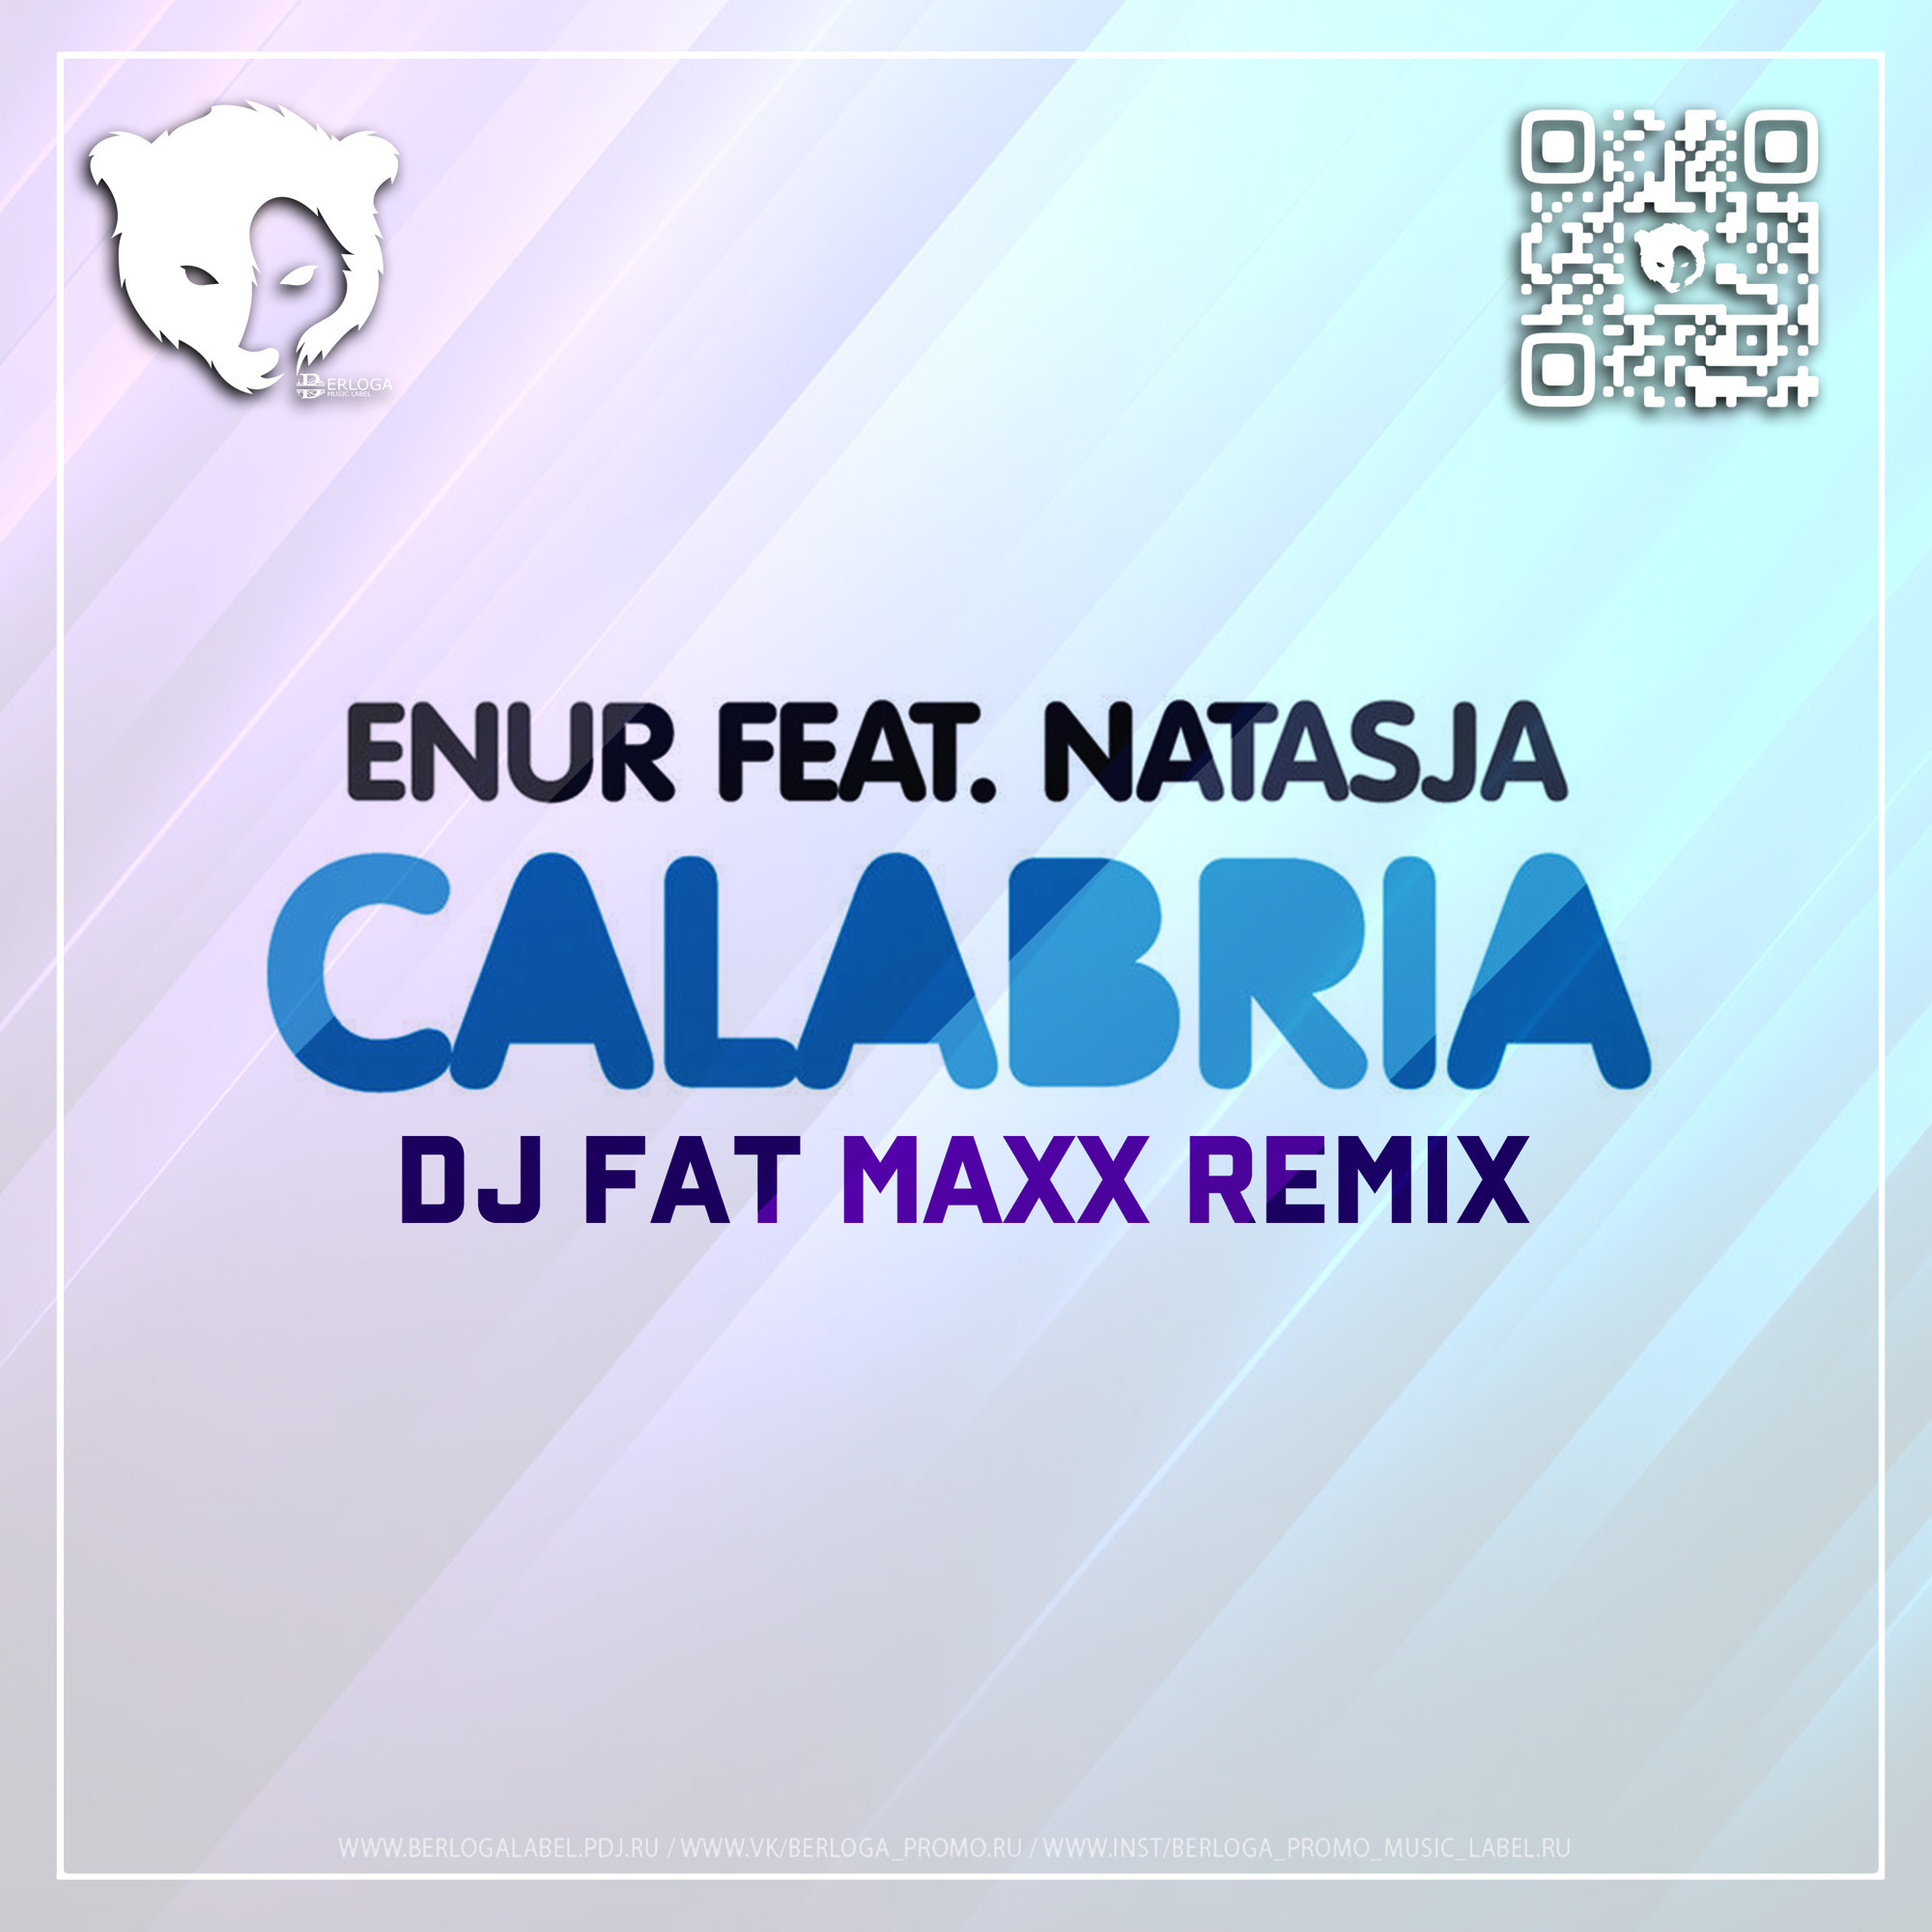 Enur feat. Natasja Calabria 2007. Enur x Natasja - Calabria (DJ fat Maxx Remix). Get a way - Original + Remixes Maxx. Дым бомбим dj fat maxx